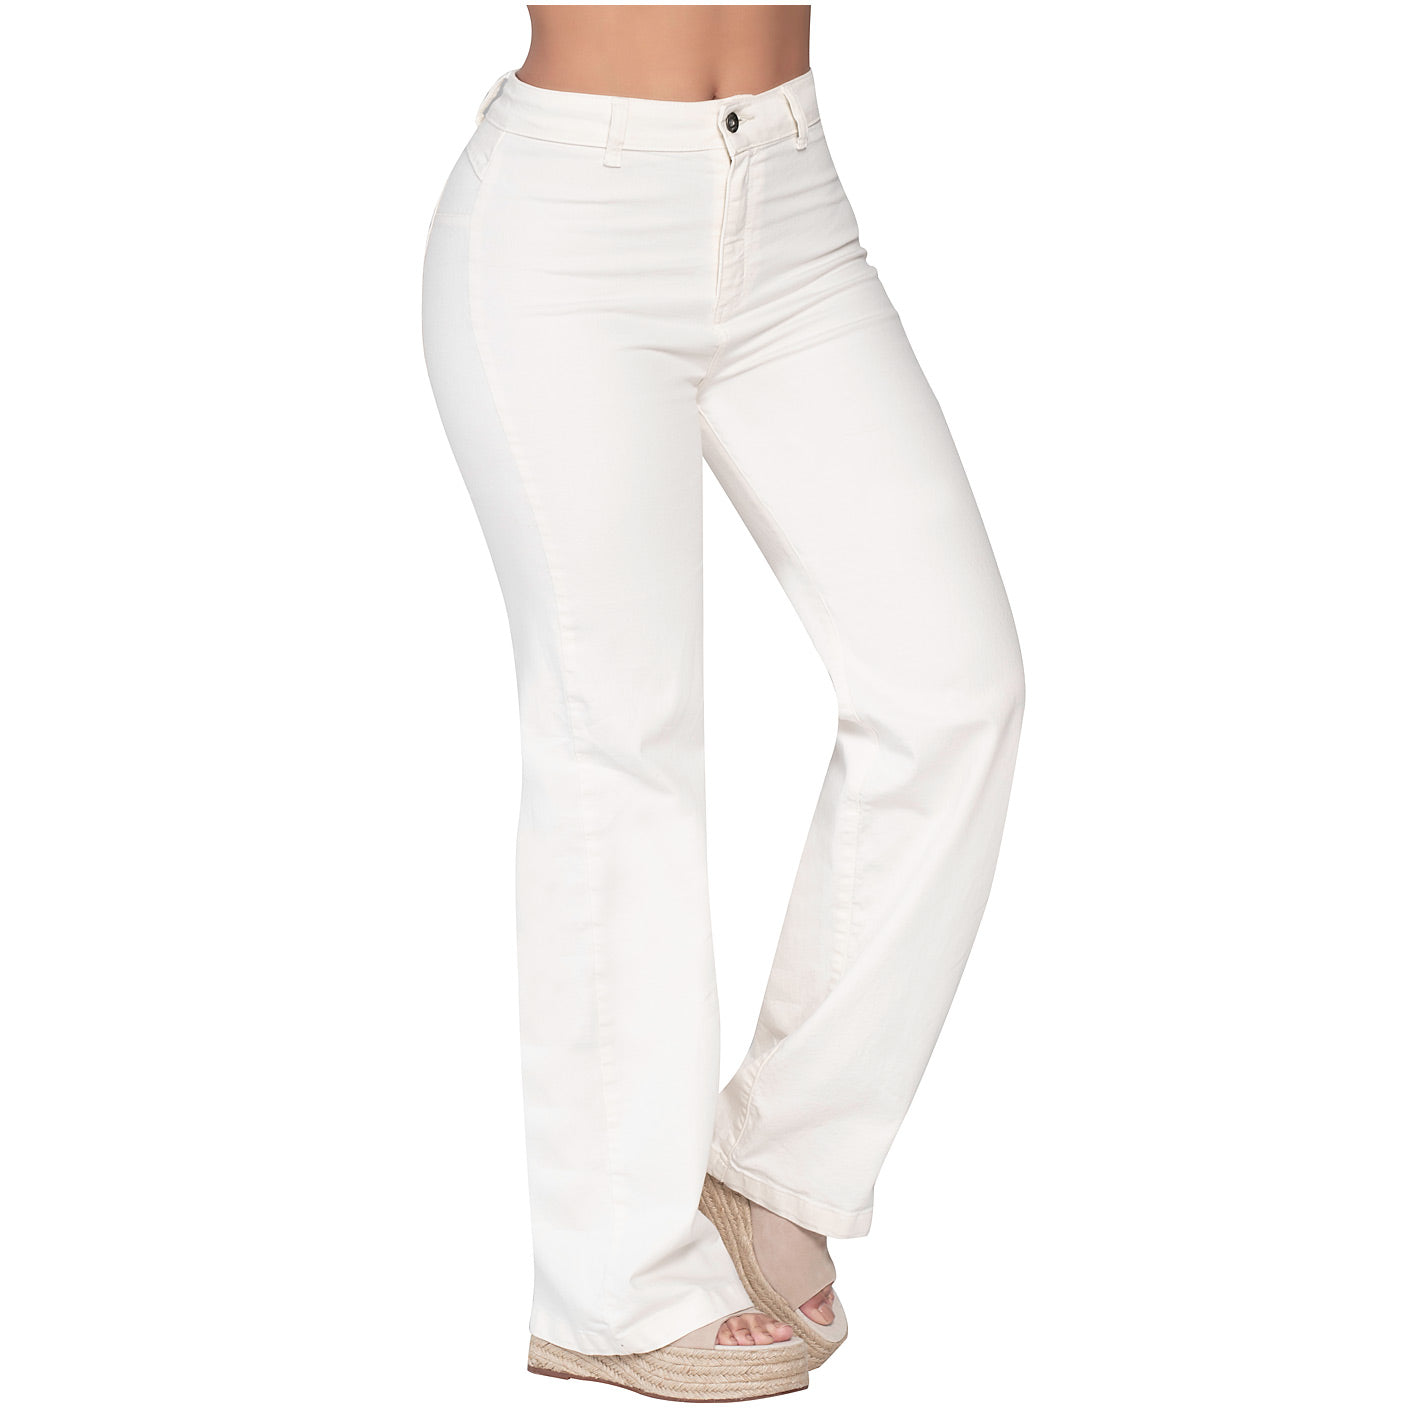 Lowla 242363 - Straight Leg High Waisted White jeans for Women